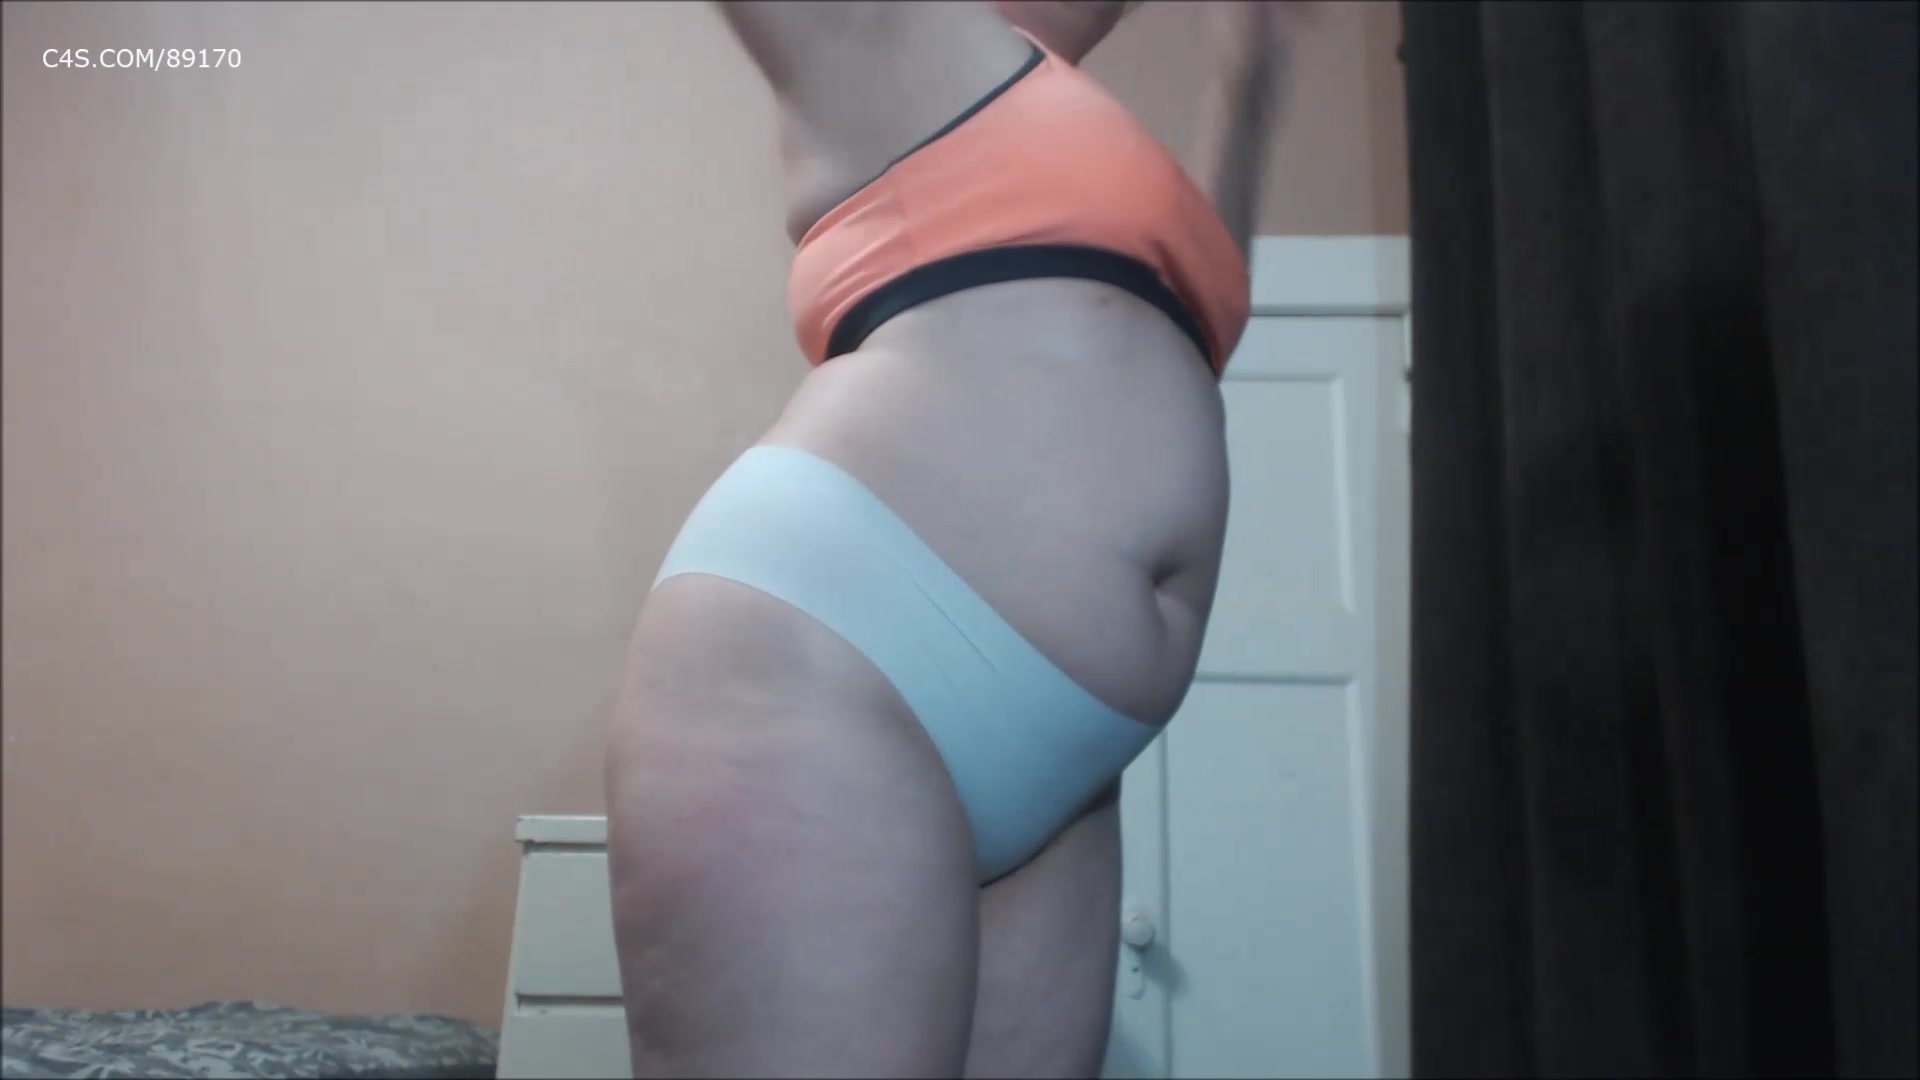 Free Chubby Gf Pics - Booty4u chubby girl doing stretches xxx free manyvids porn video